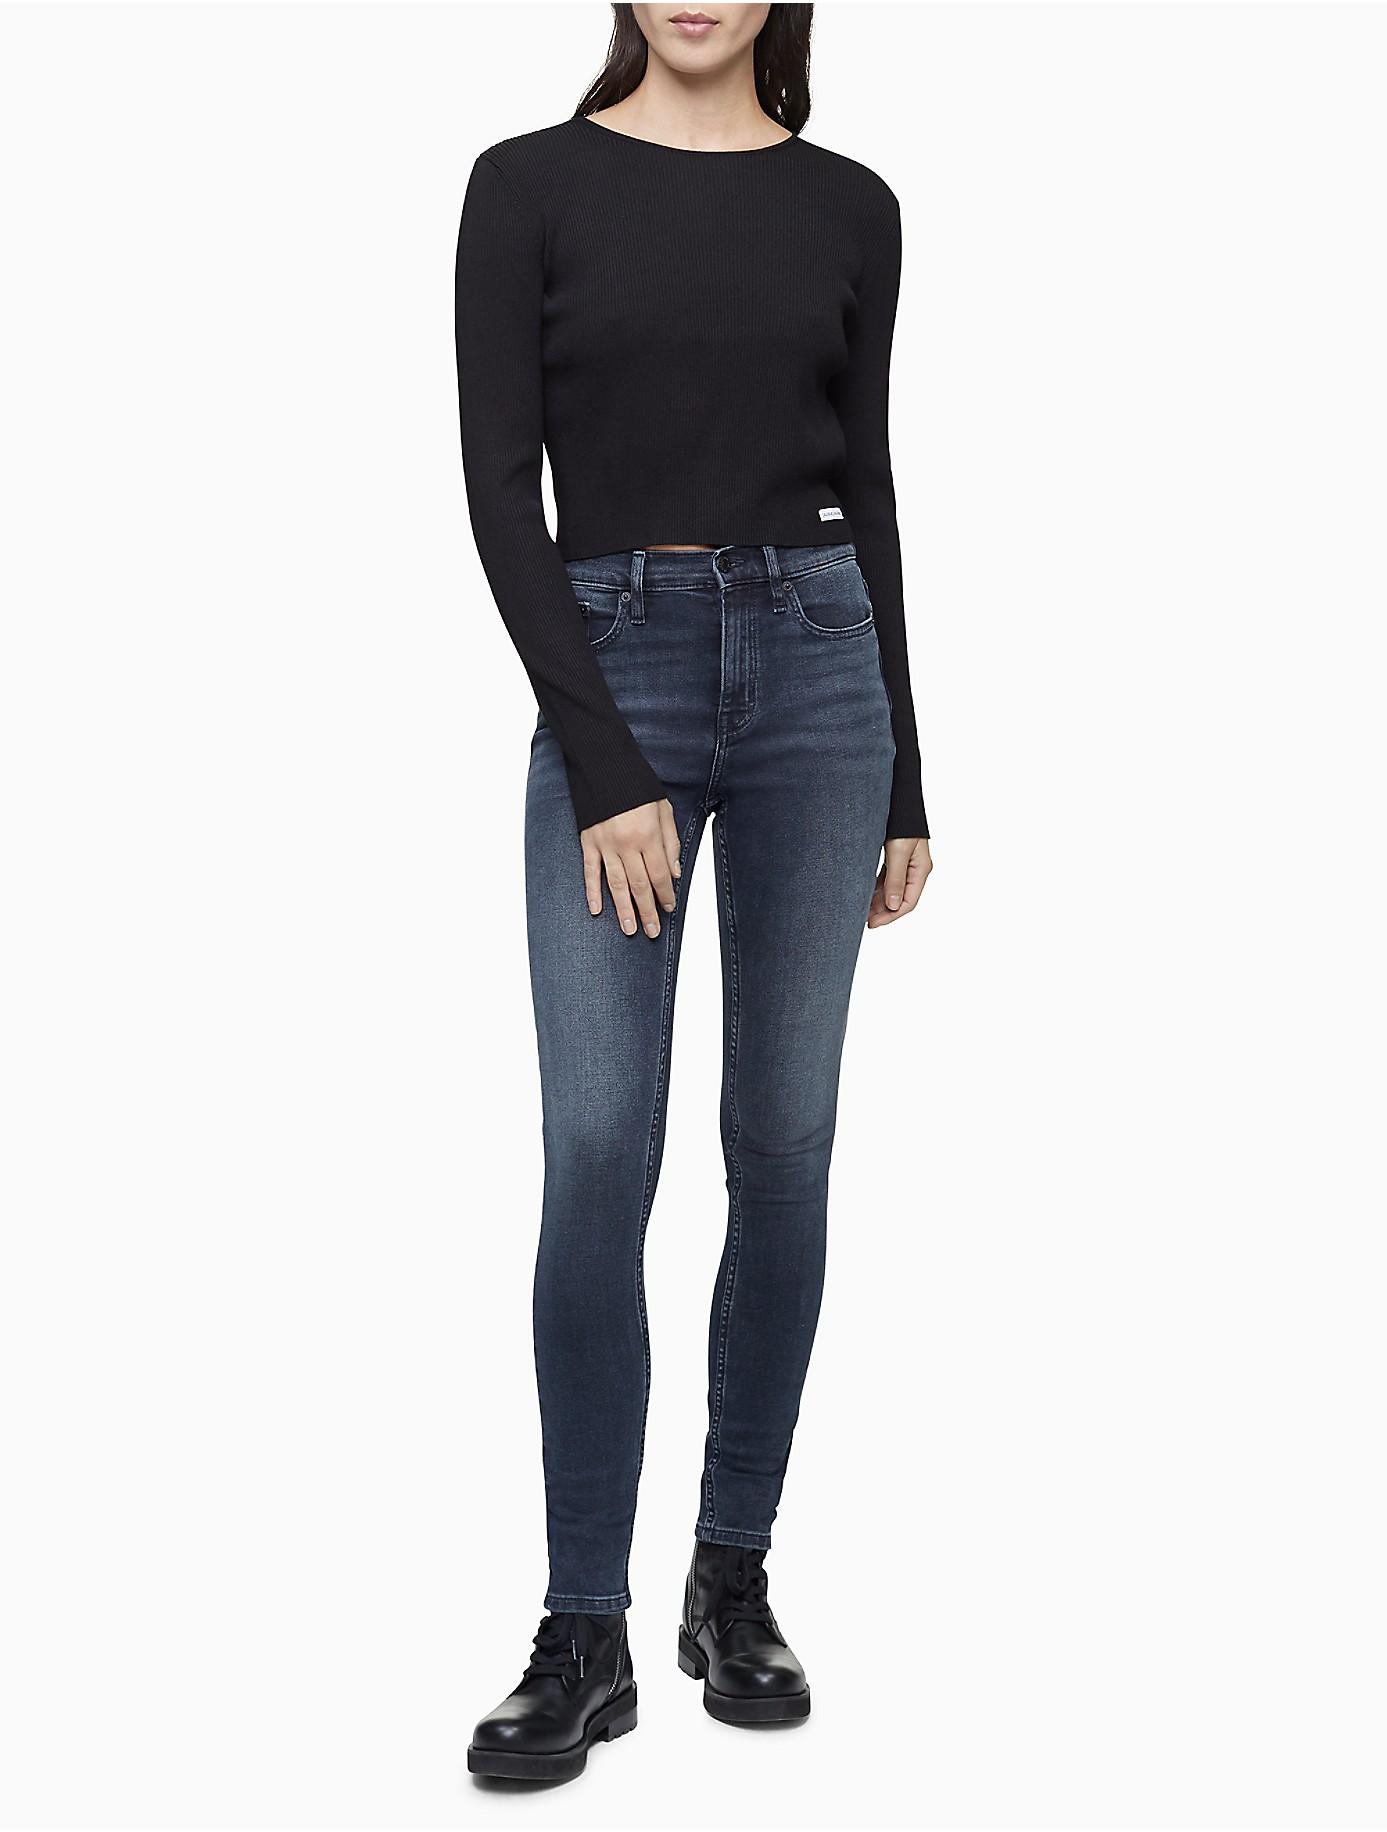 | Lyst Long Crop in Black Ribbed Top Solid Calvin Klein Sleeve